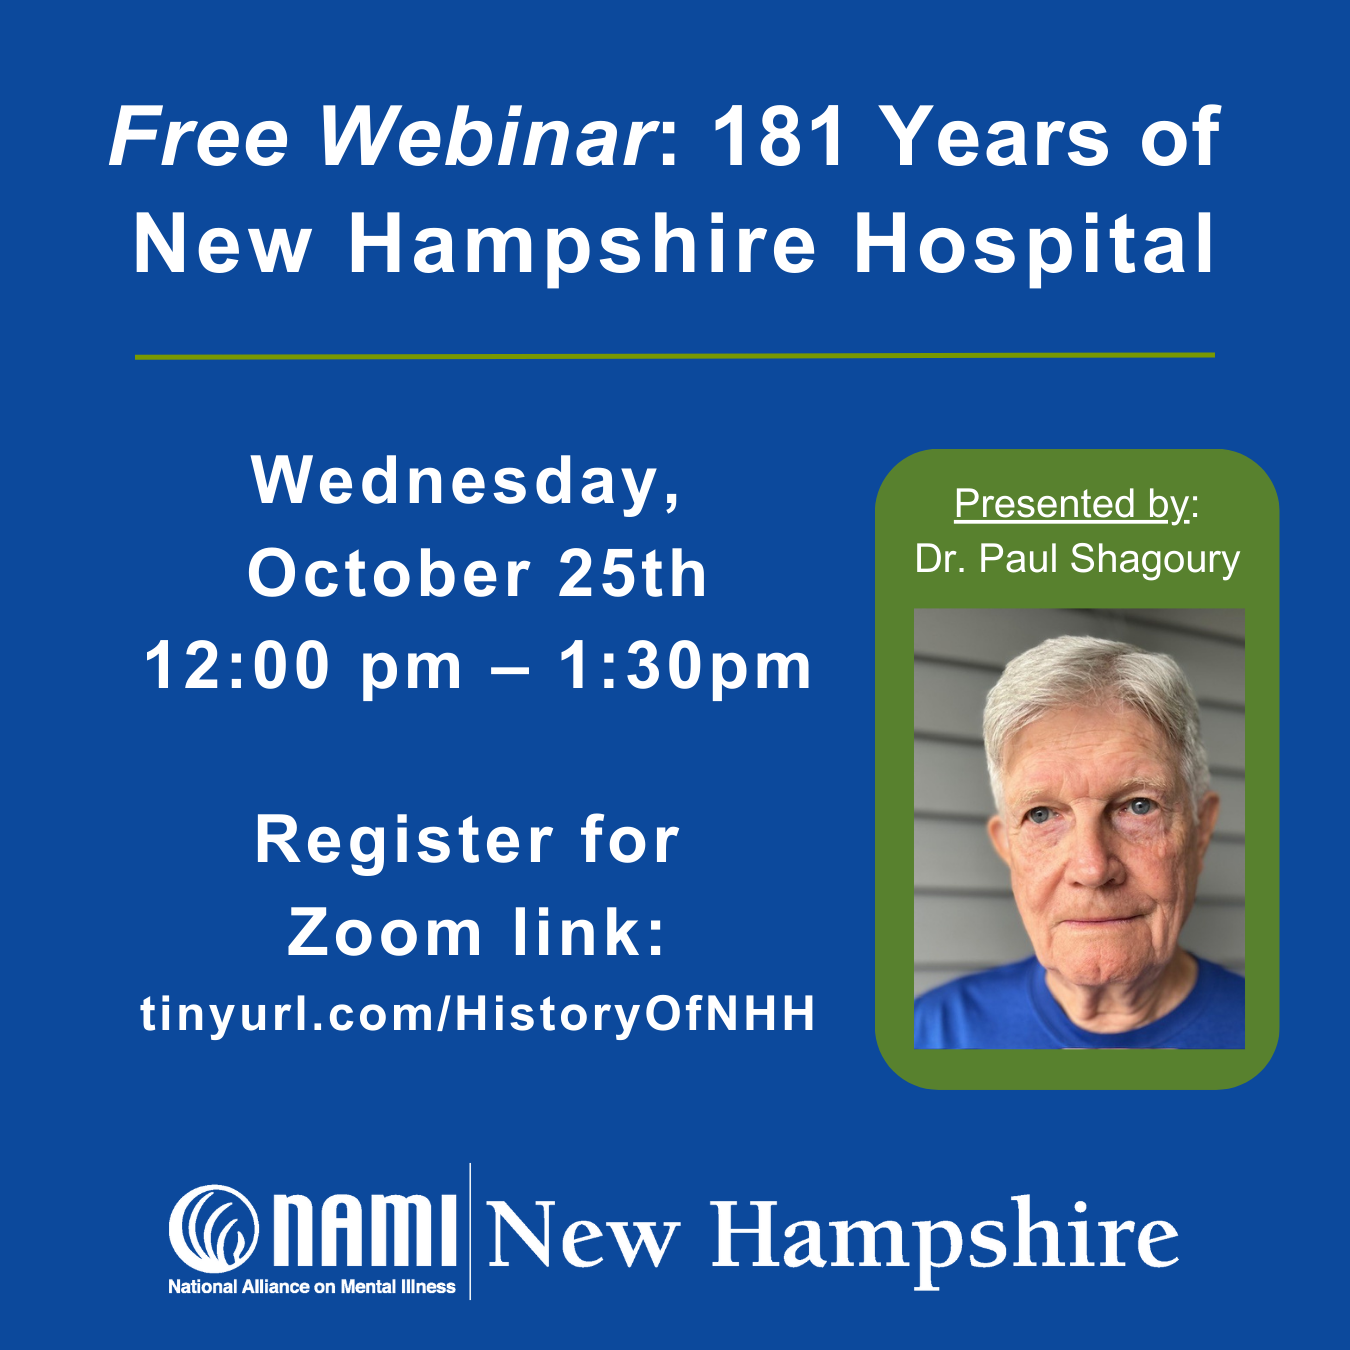 Free webinar: 181 Years of New Hampshire Hospital